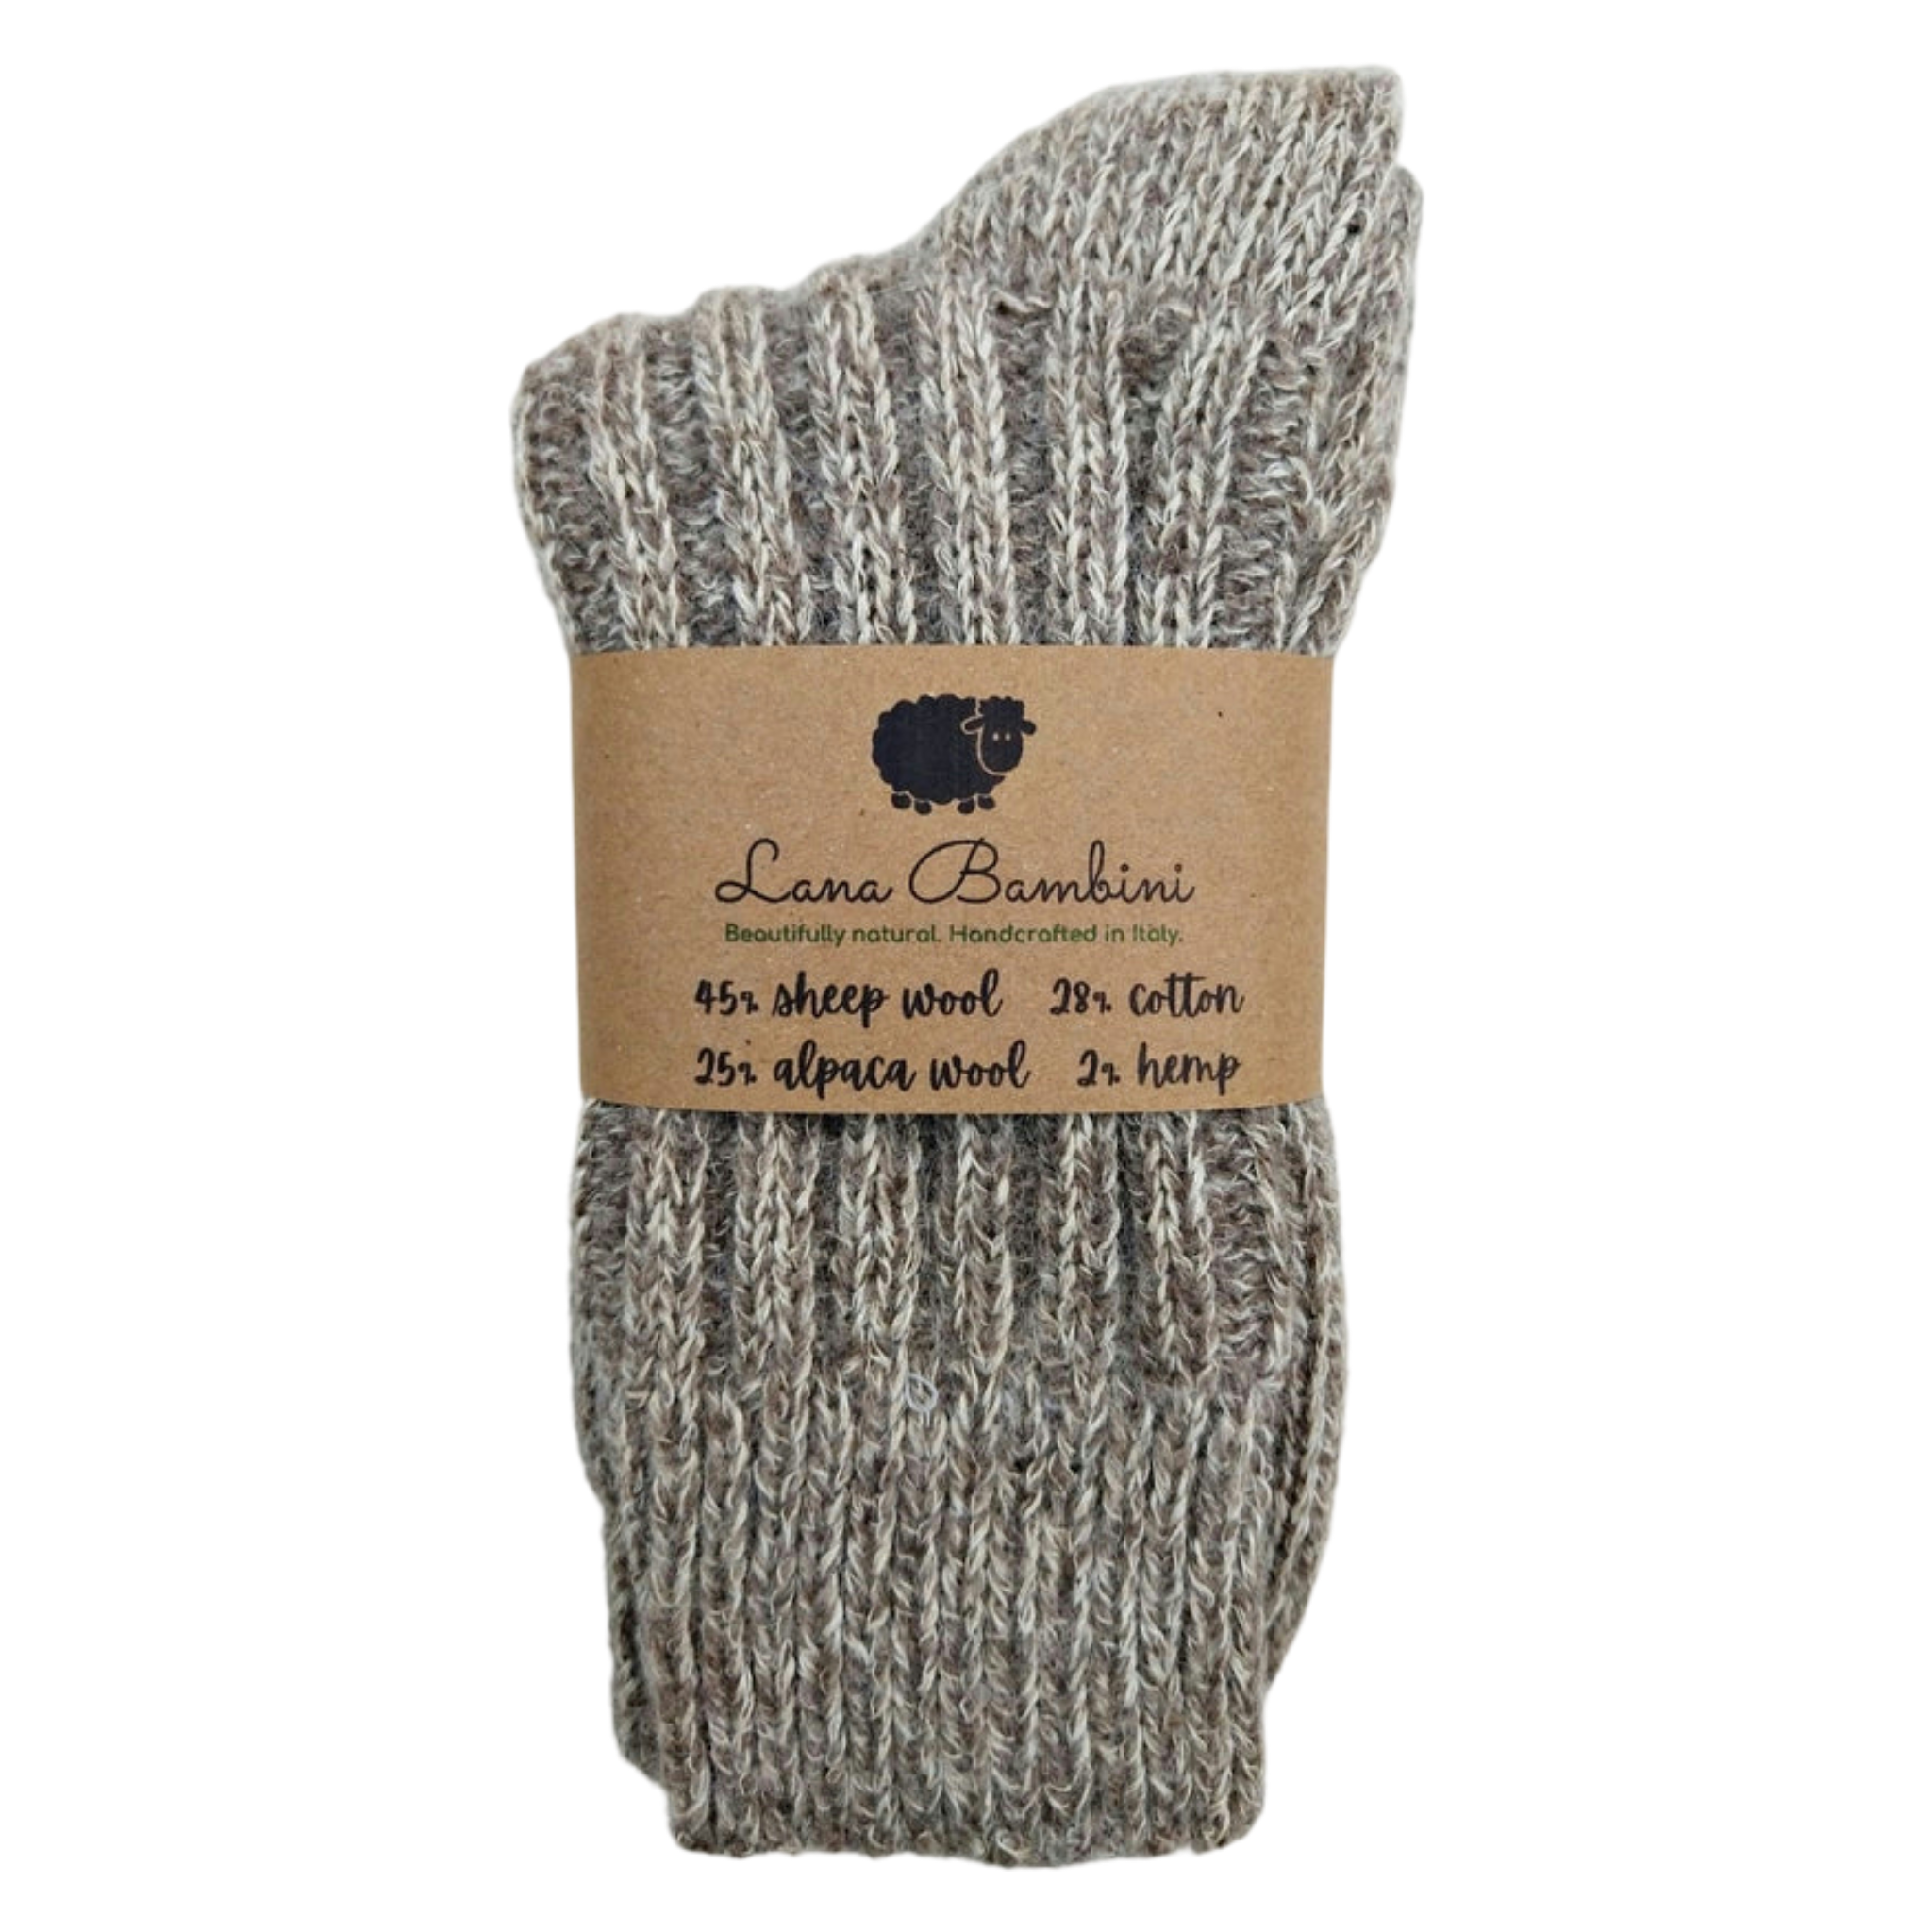 Lana Bambini Sara Wool Alpaca Cotton Hemp Socks